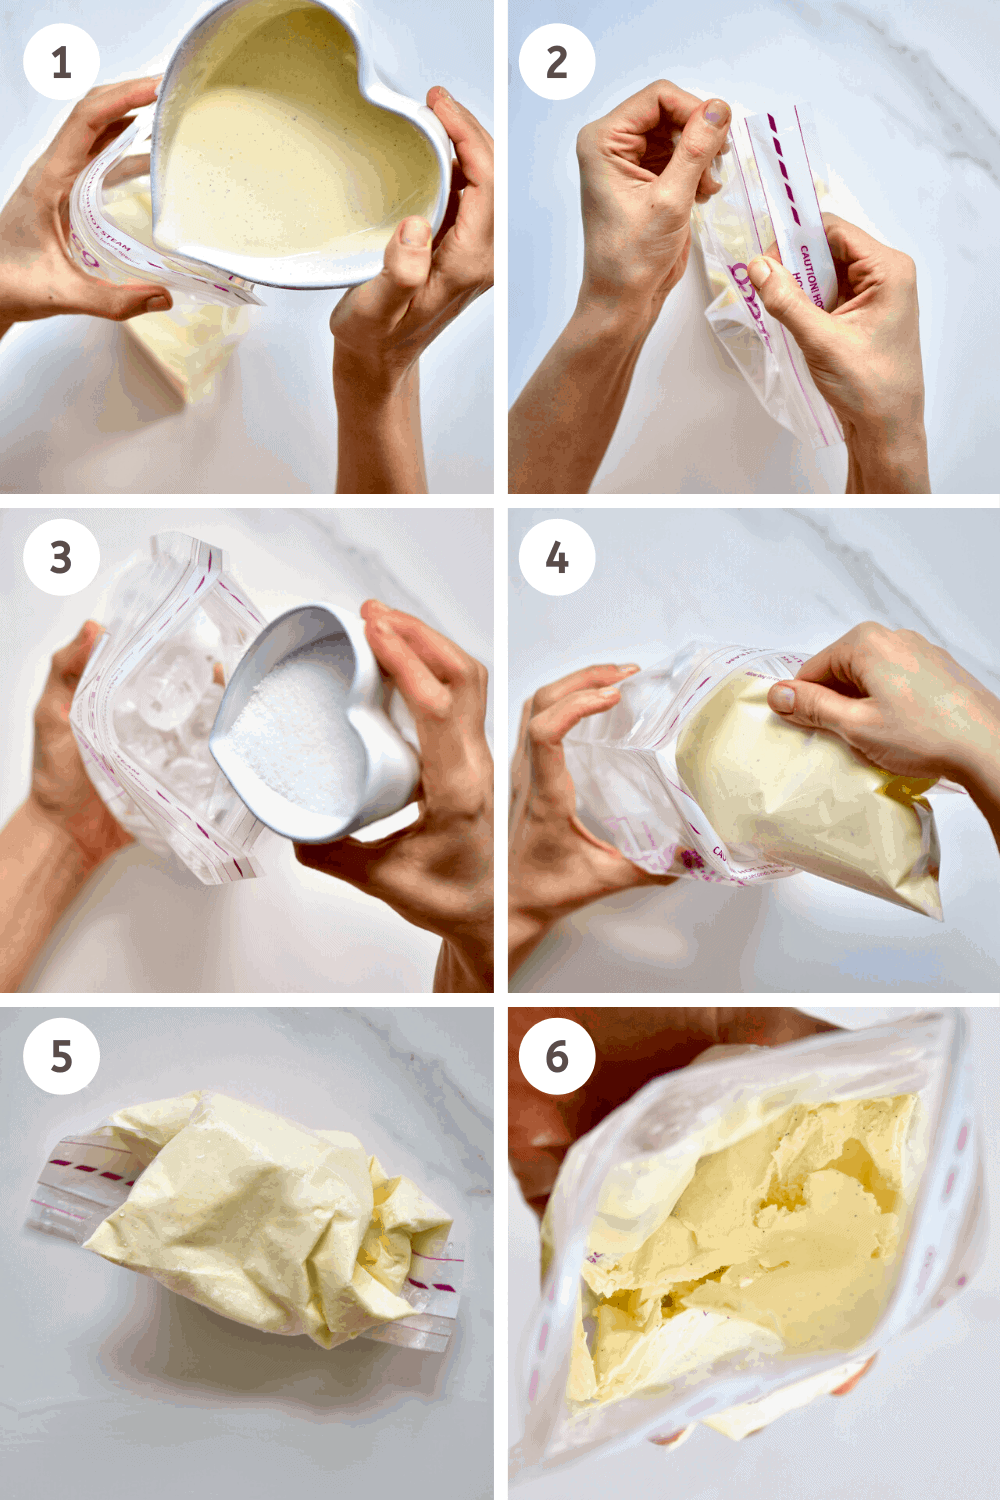 Steps for making soft serve ice-cream